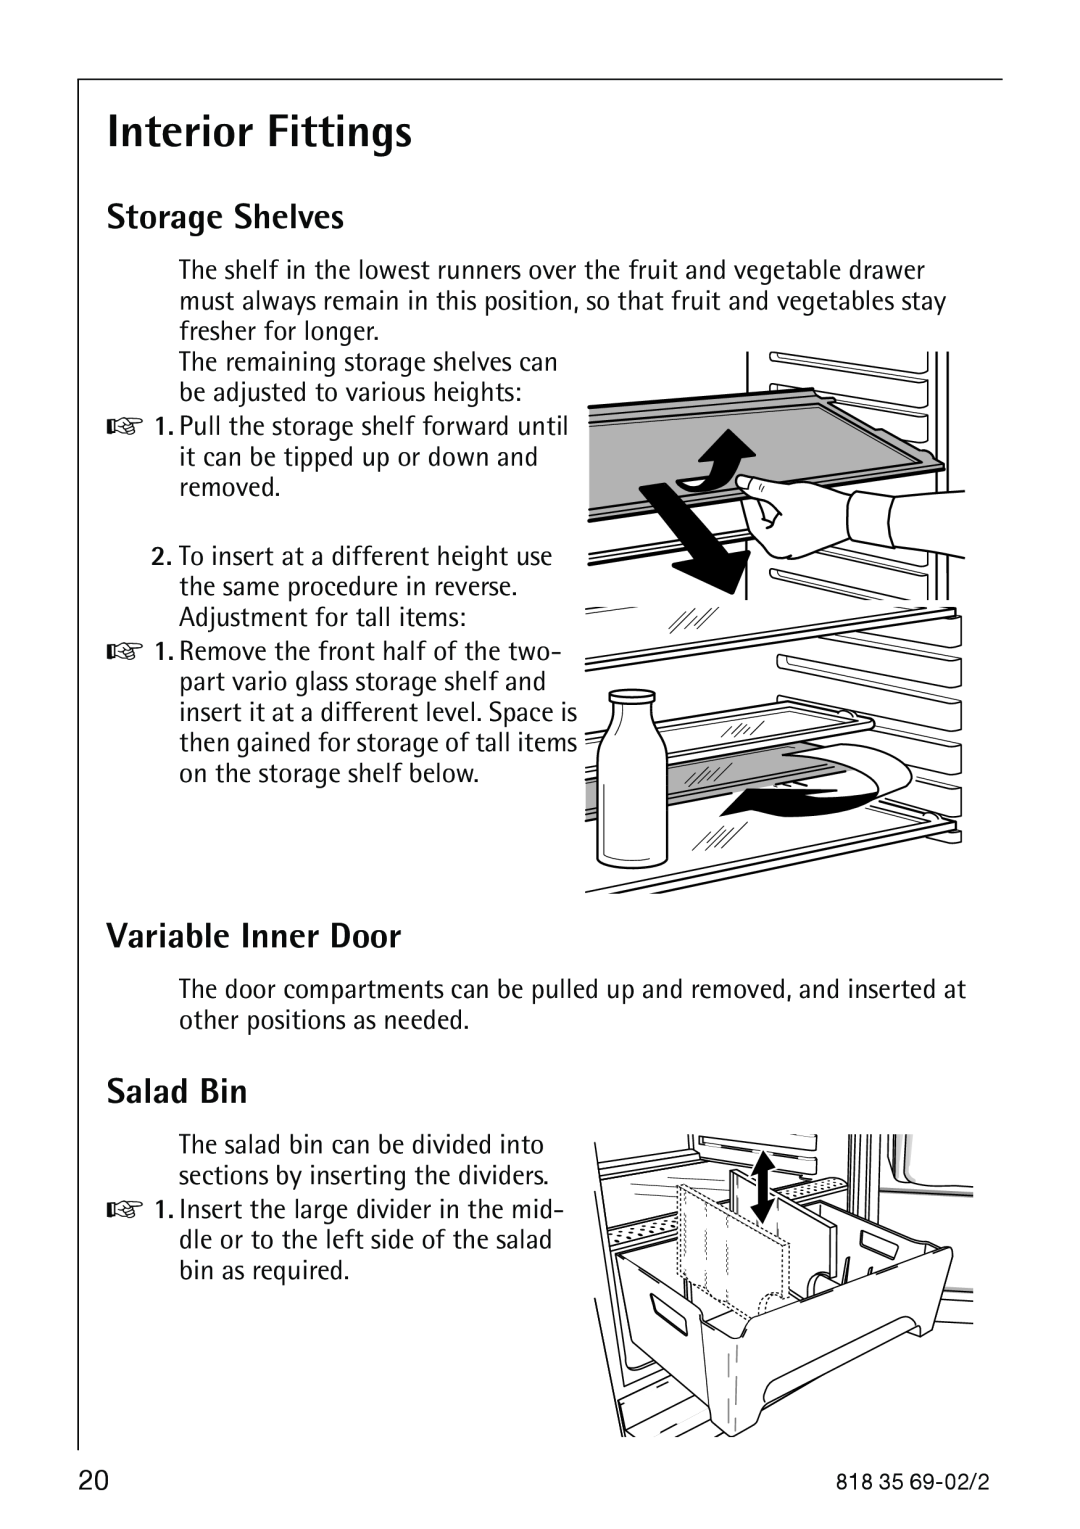 AEG S75578KG3 manual Interior Fittings, Storage Shelves, Variable Inner Door, Salad Bin 